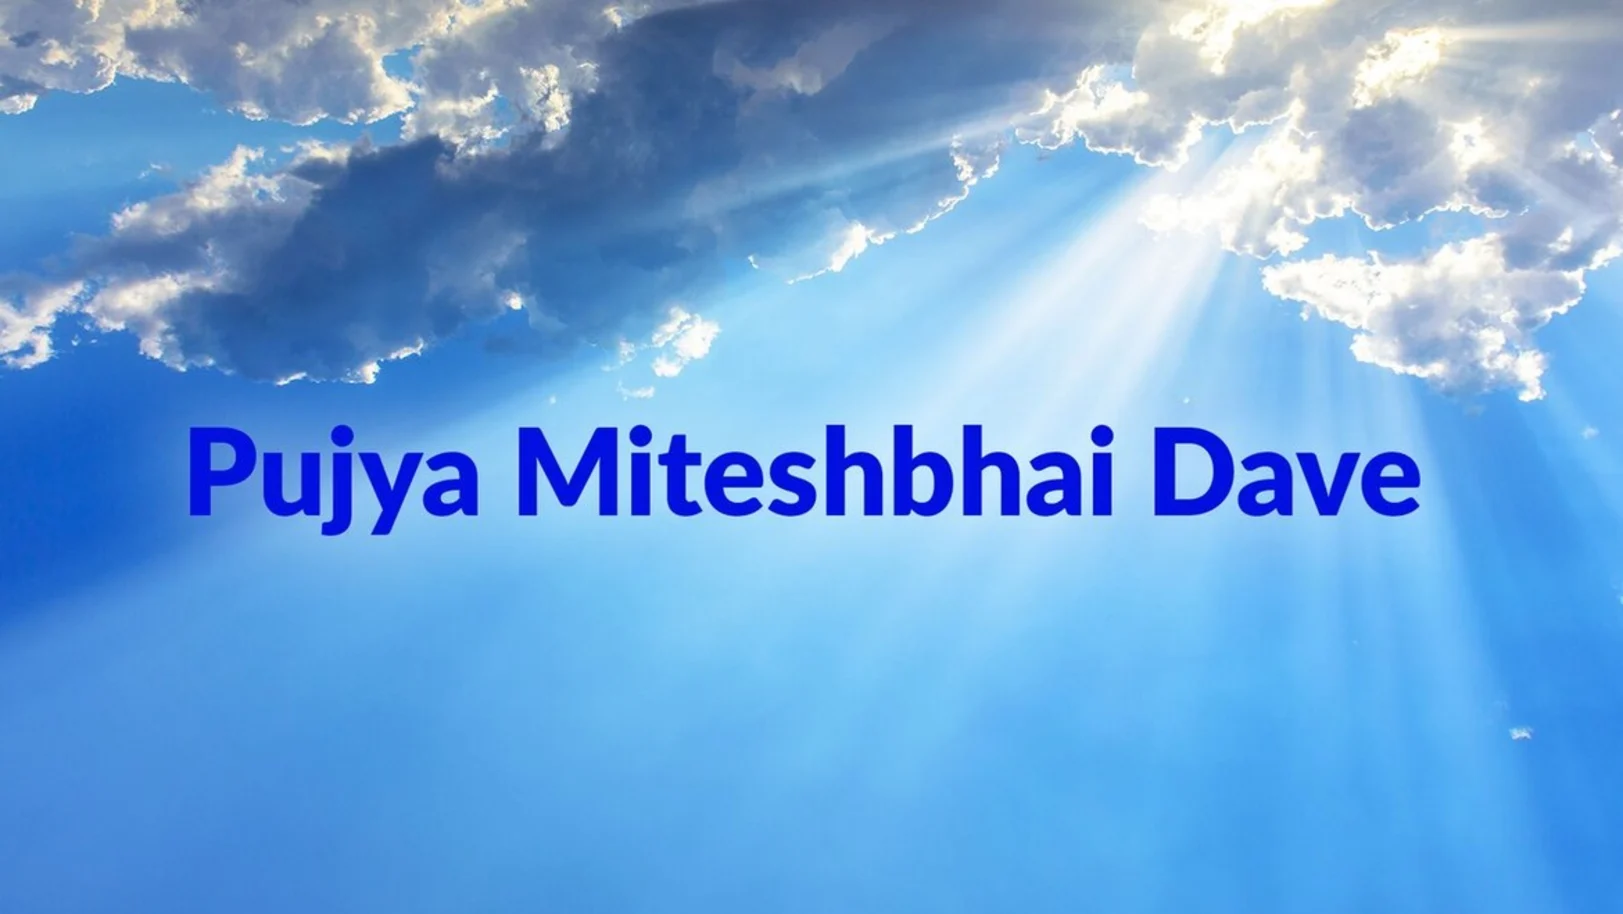 Pujya Miteshbhai Dave Streaming Now On Aastha Gujarati